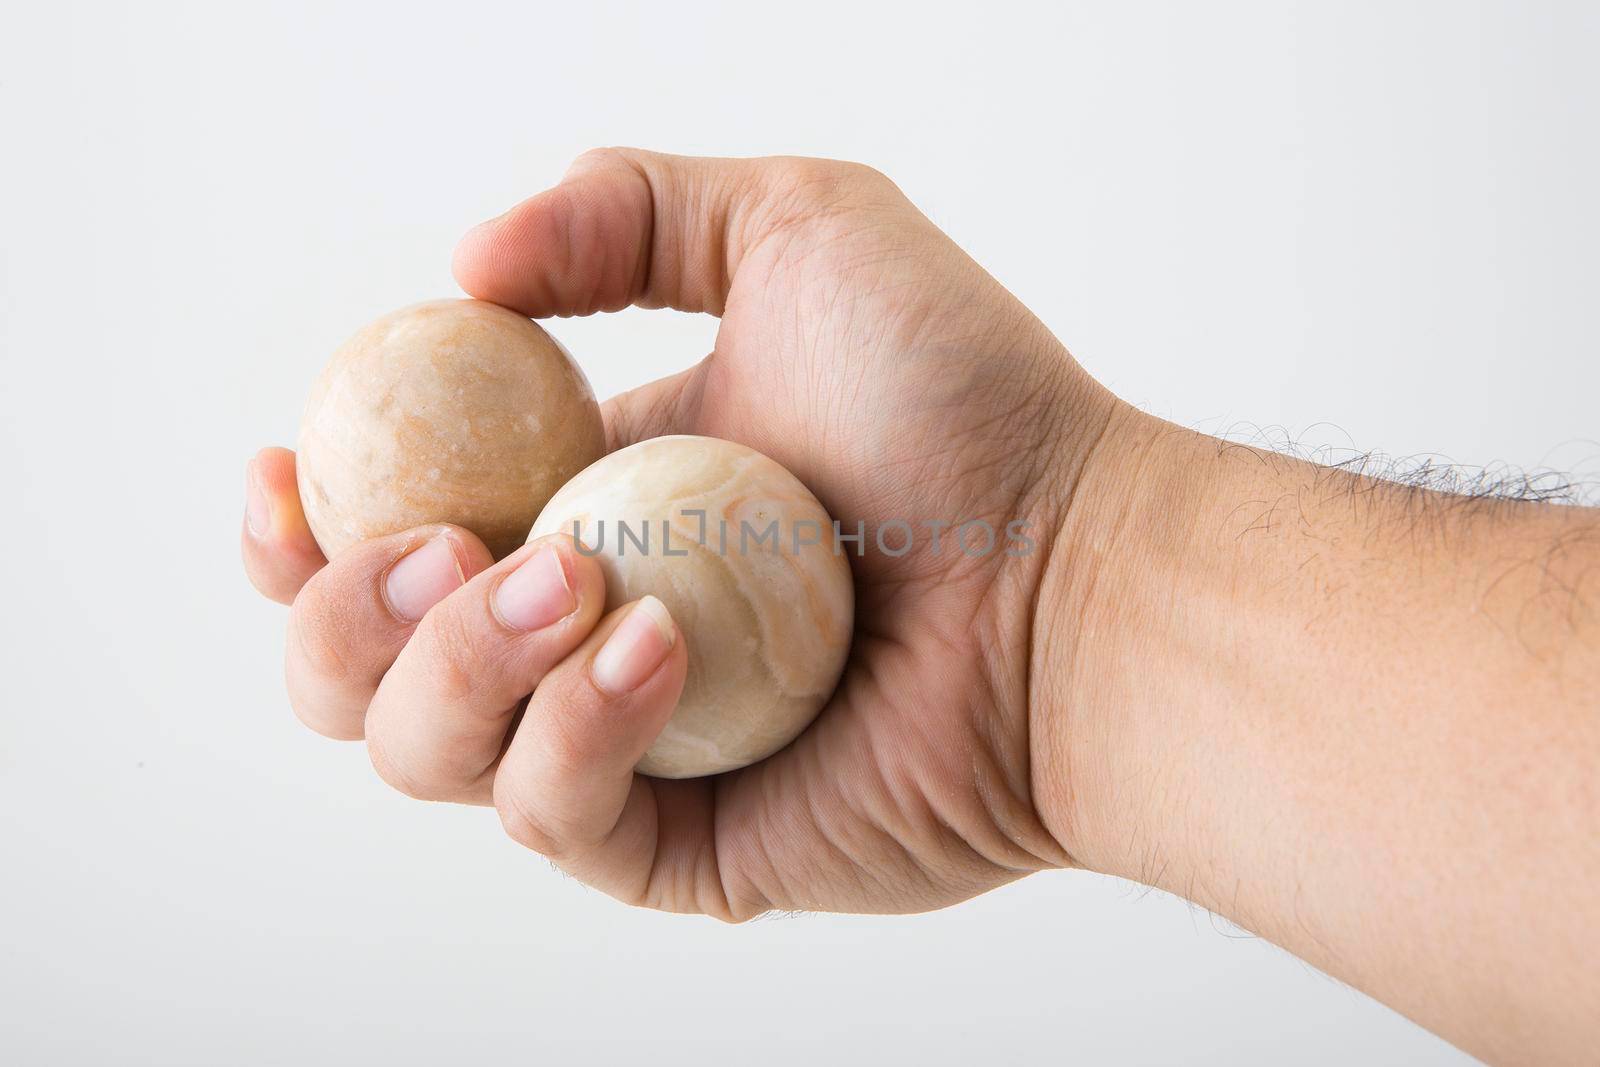 Massage stones on the palm